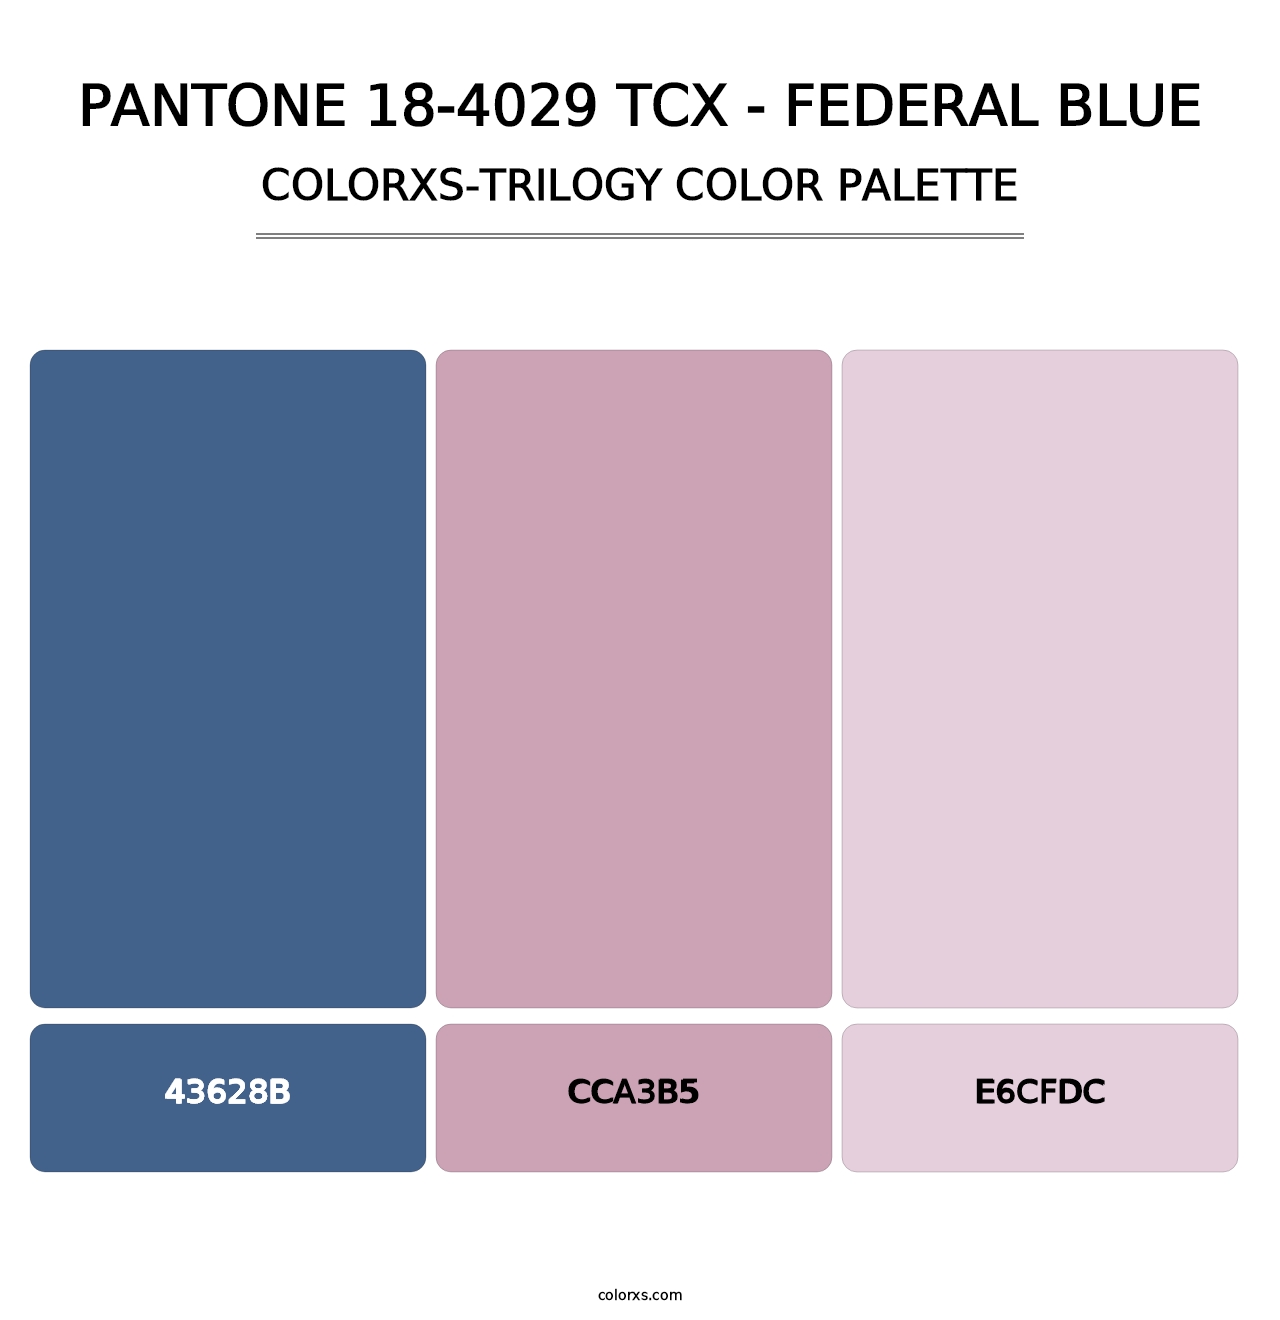 PANTONE 18-4029 TCX - Federal Blue - Colorxs Trilogy Palette